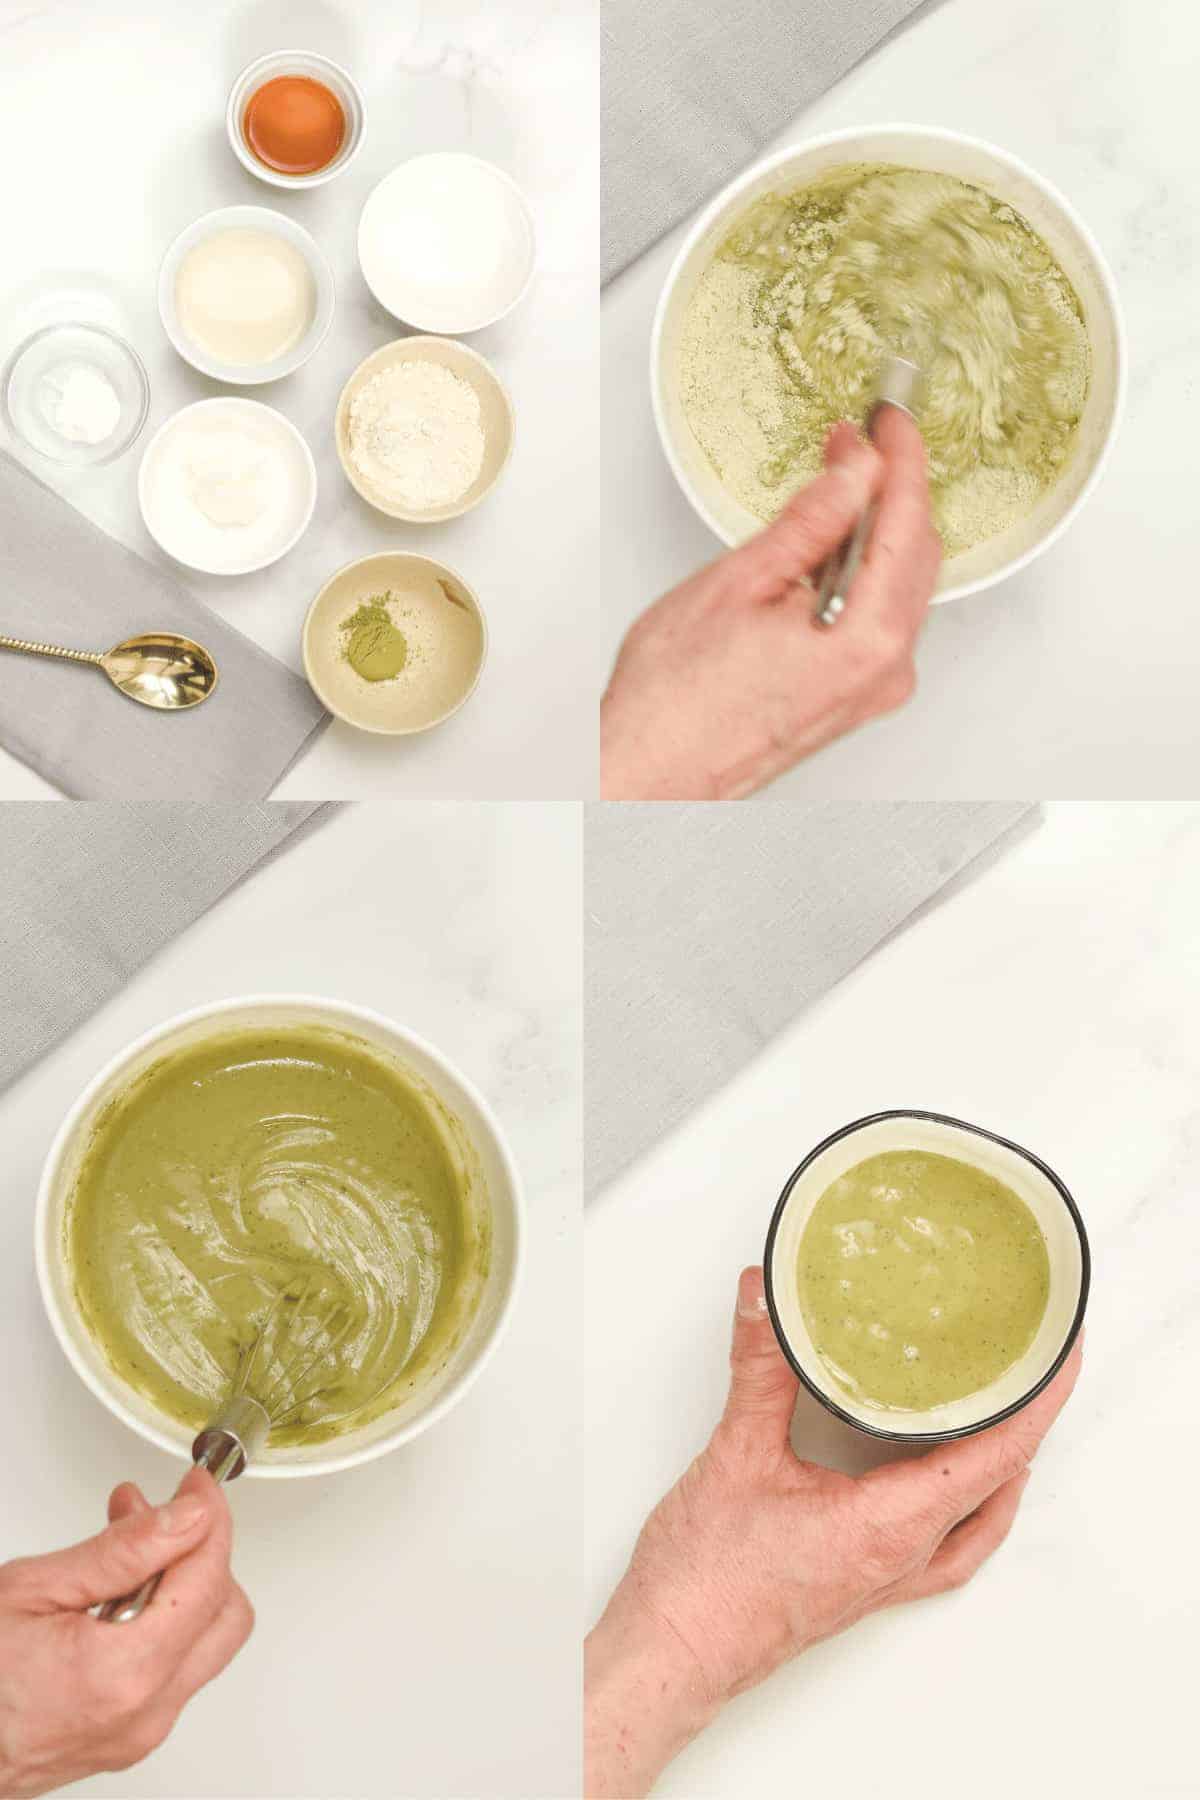 https://www.theconsciousplantkitchen.com/wp-content/uploads/2021/10/How-to-make-Matcha-Mug-Cake.jpg